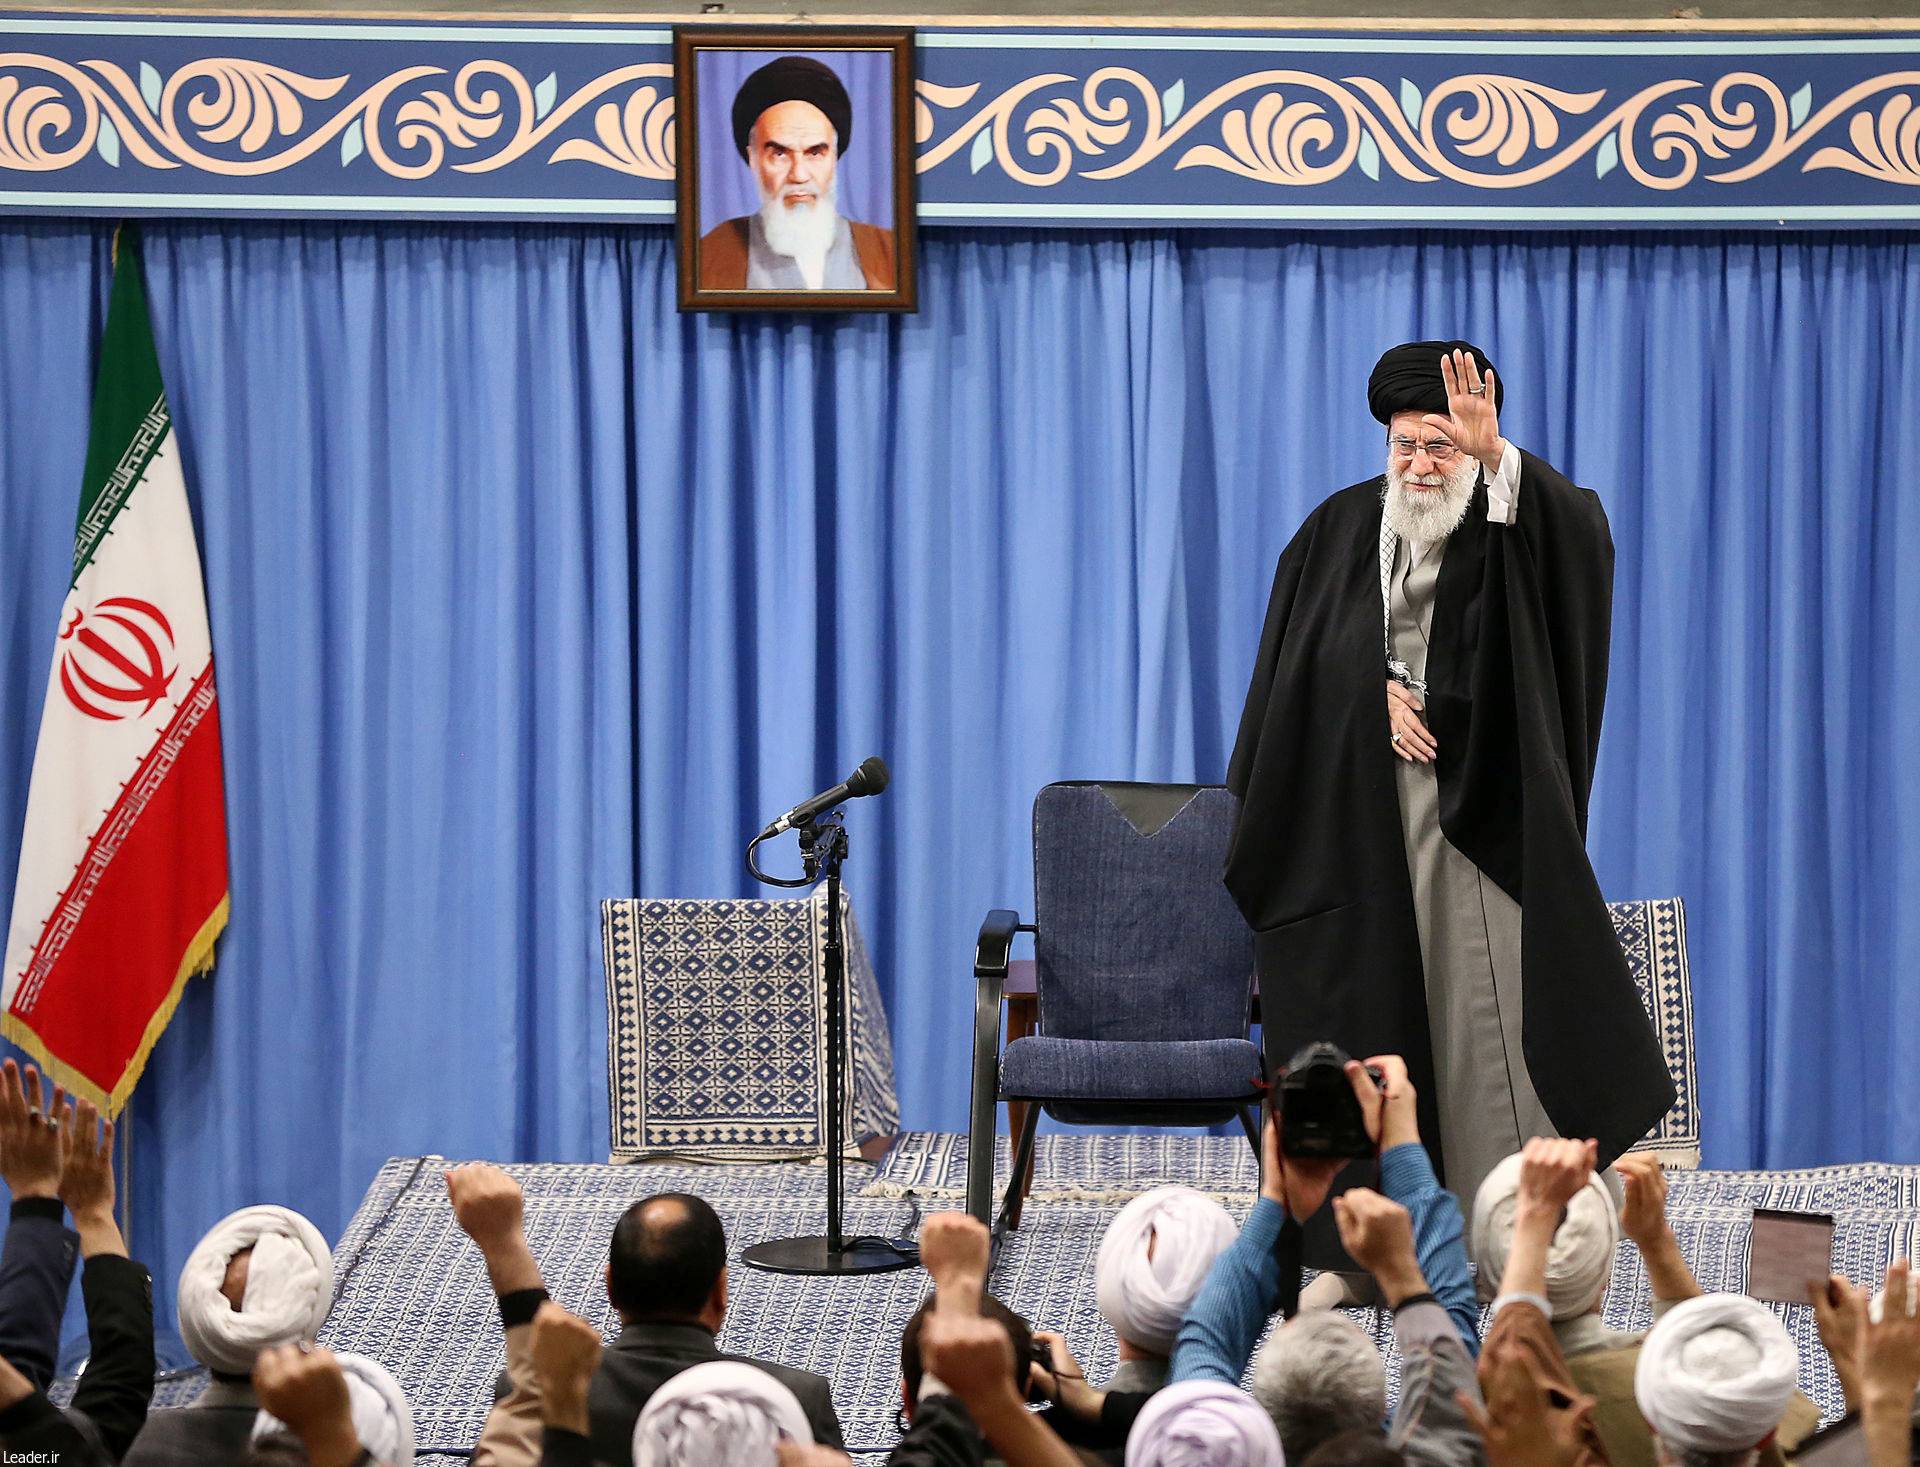 Iran's Supreme Leader Ayatollah Ali Khamenei delivers a speech during a gathering in Tehran